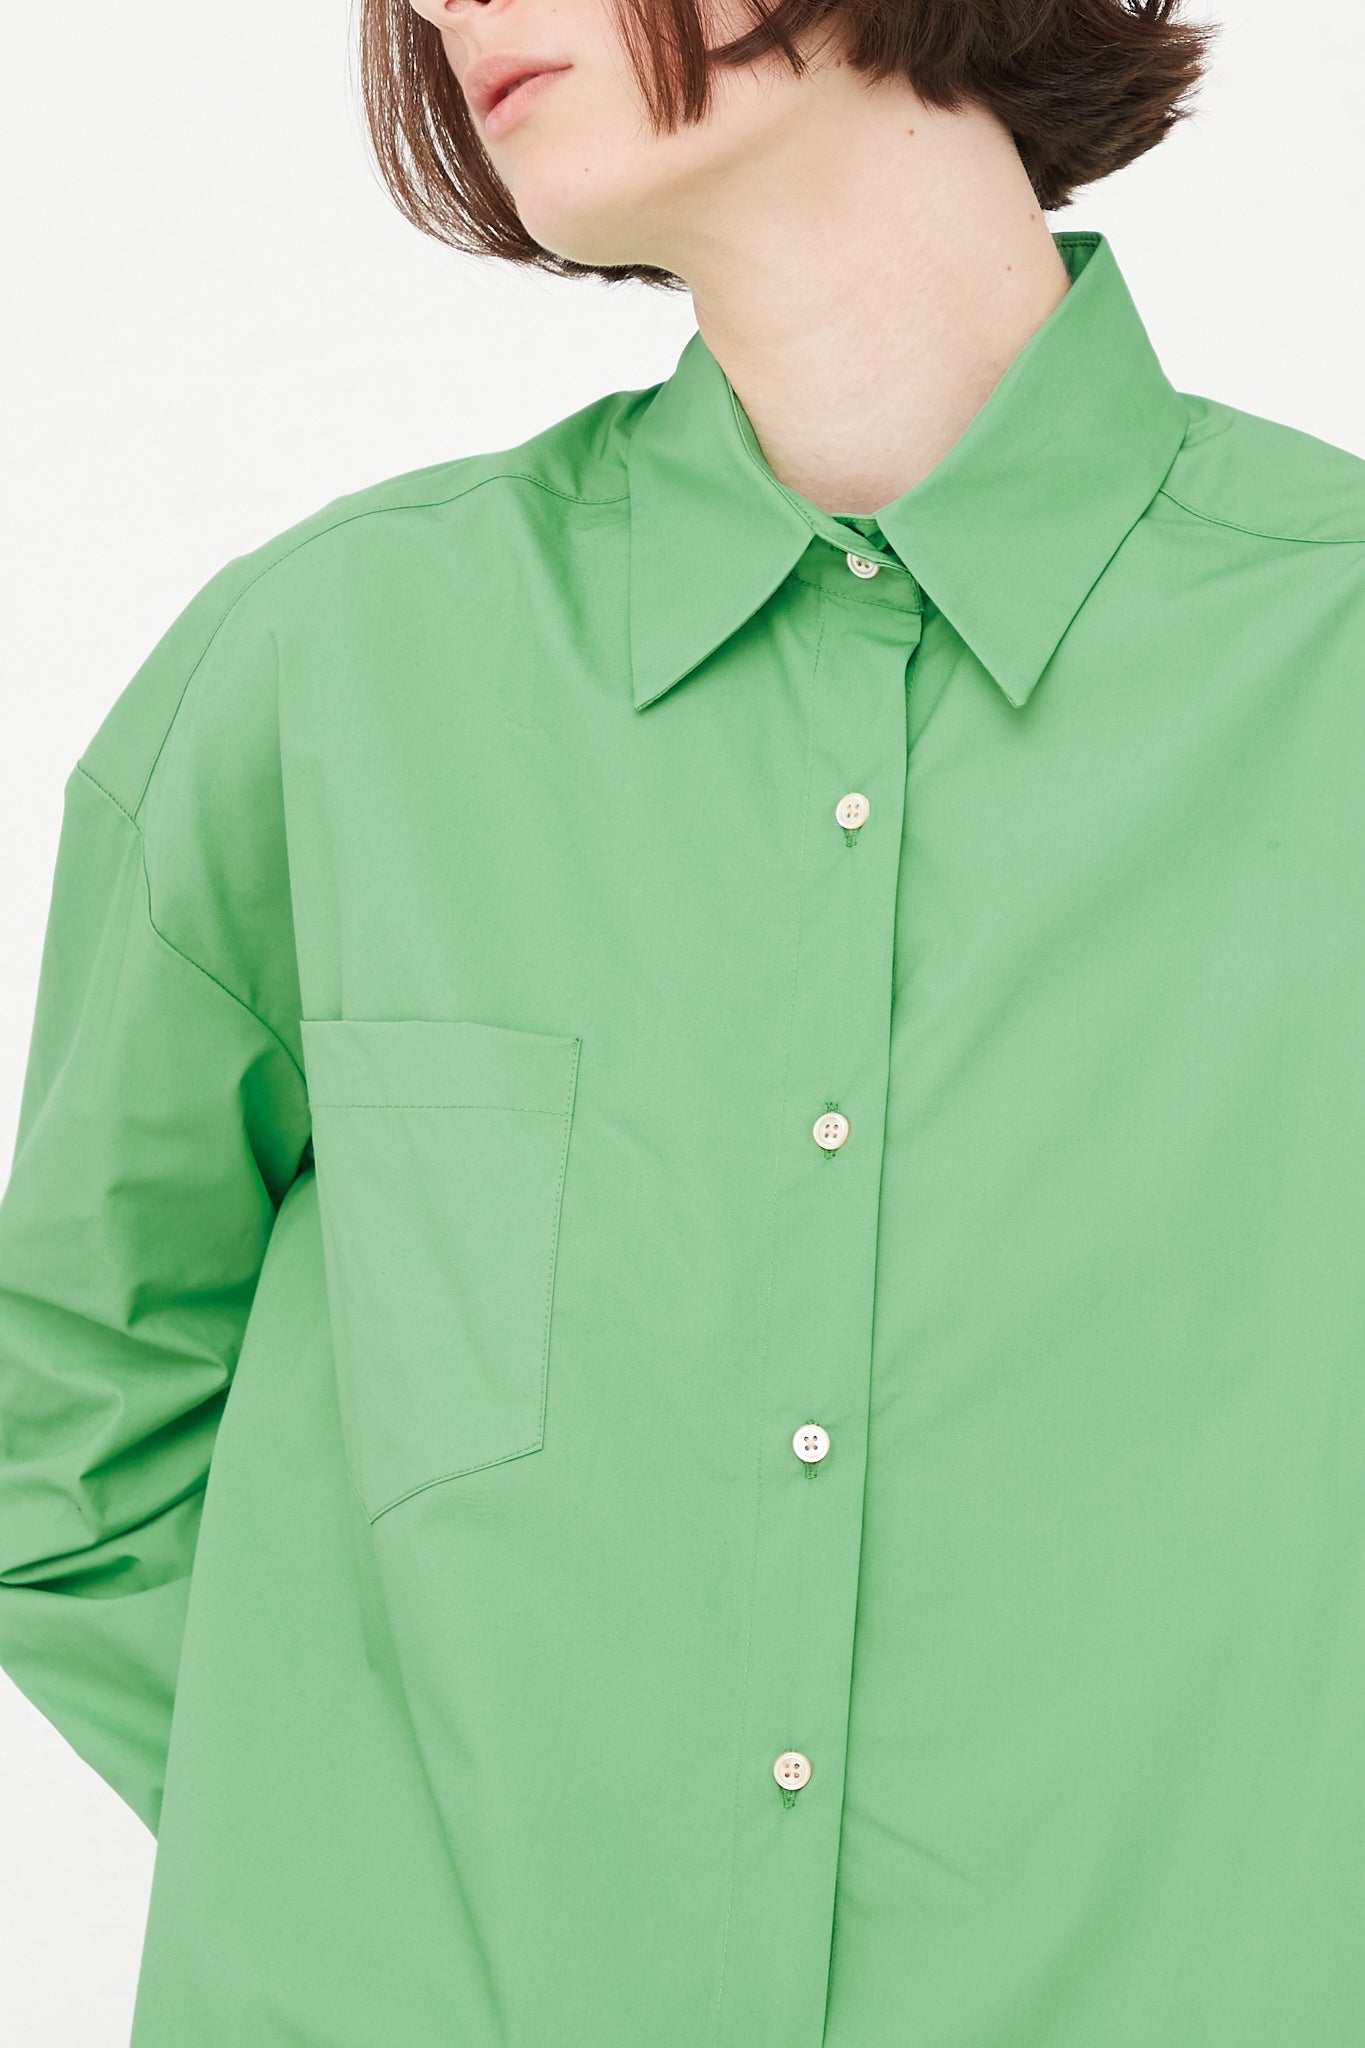 Caron Callahan - Francine Shirt in Jade Poplin collar detail